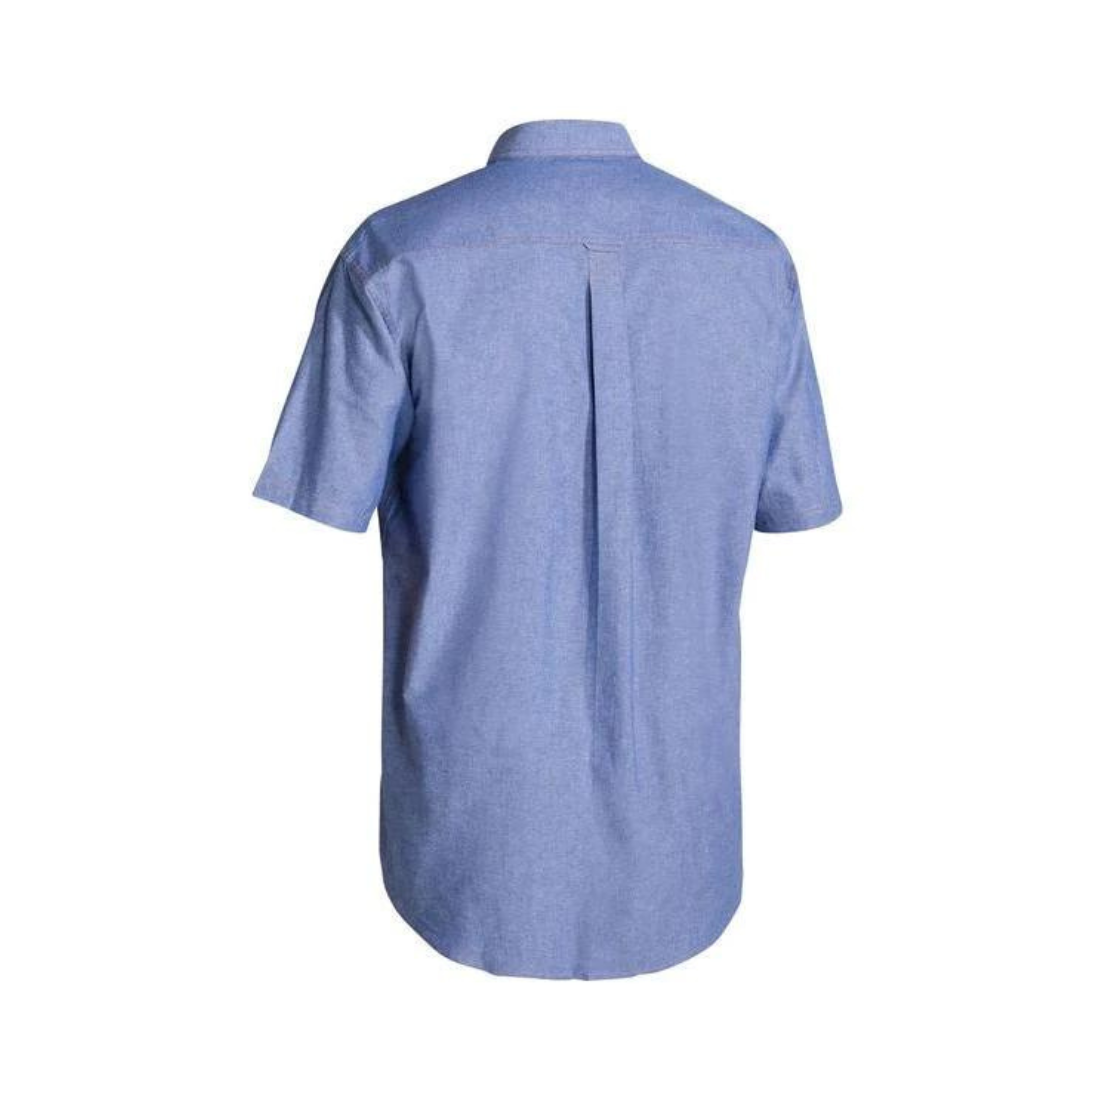 Chambray Shirt - Short Sleeve Blue Workwear by Bisley | The Bloke Shop